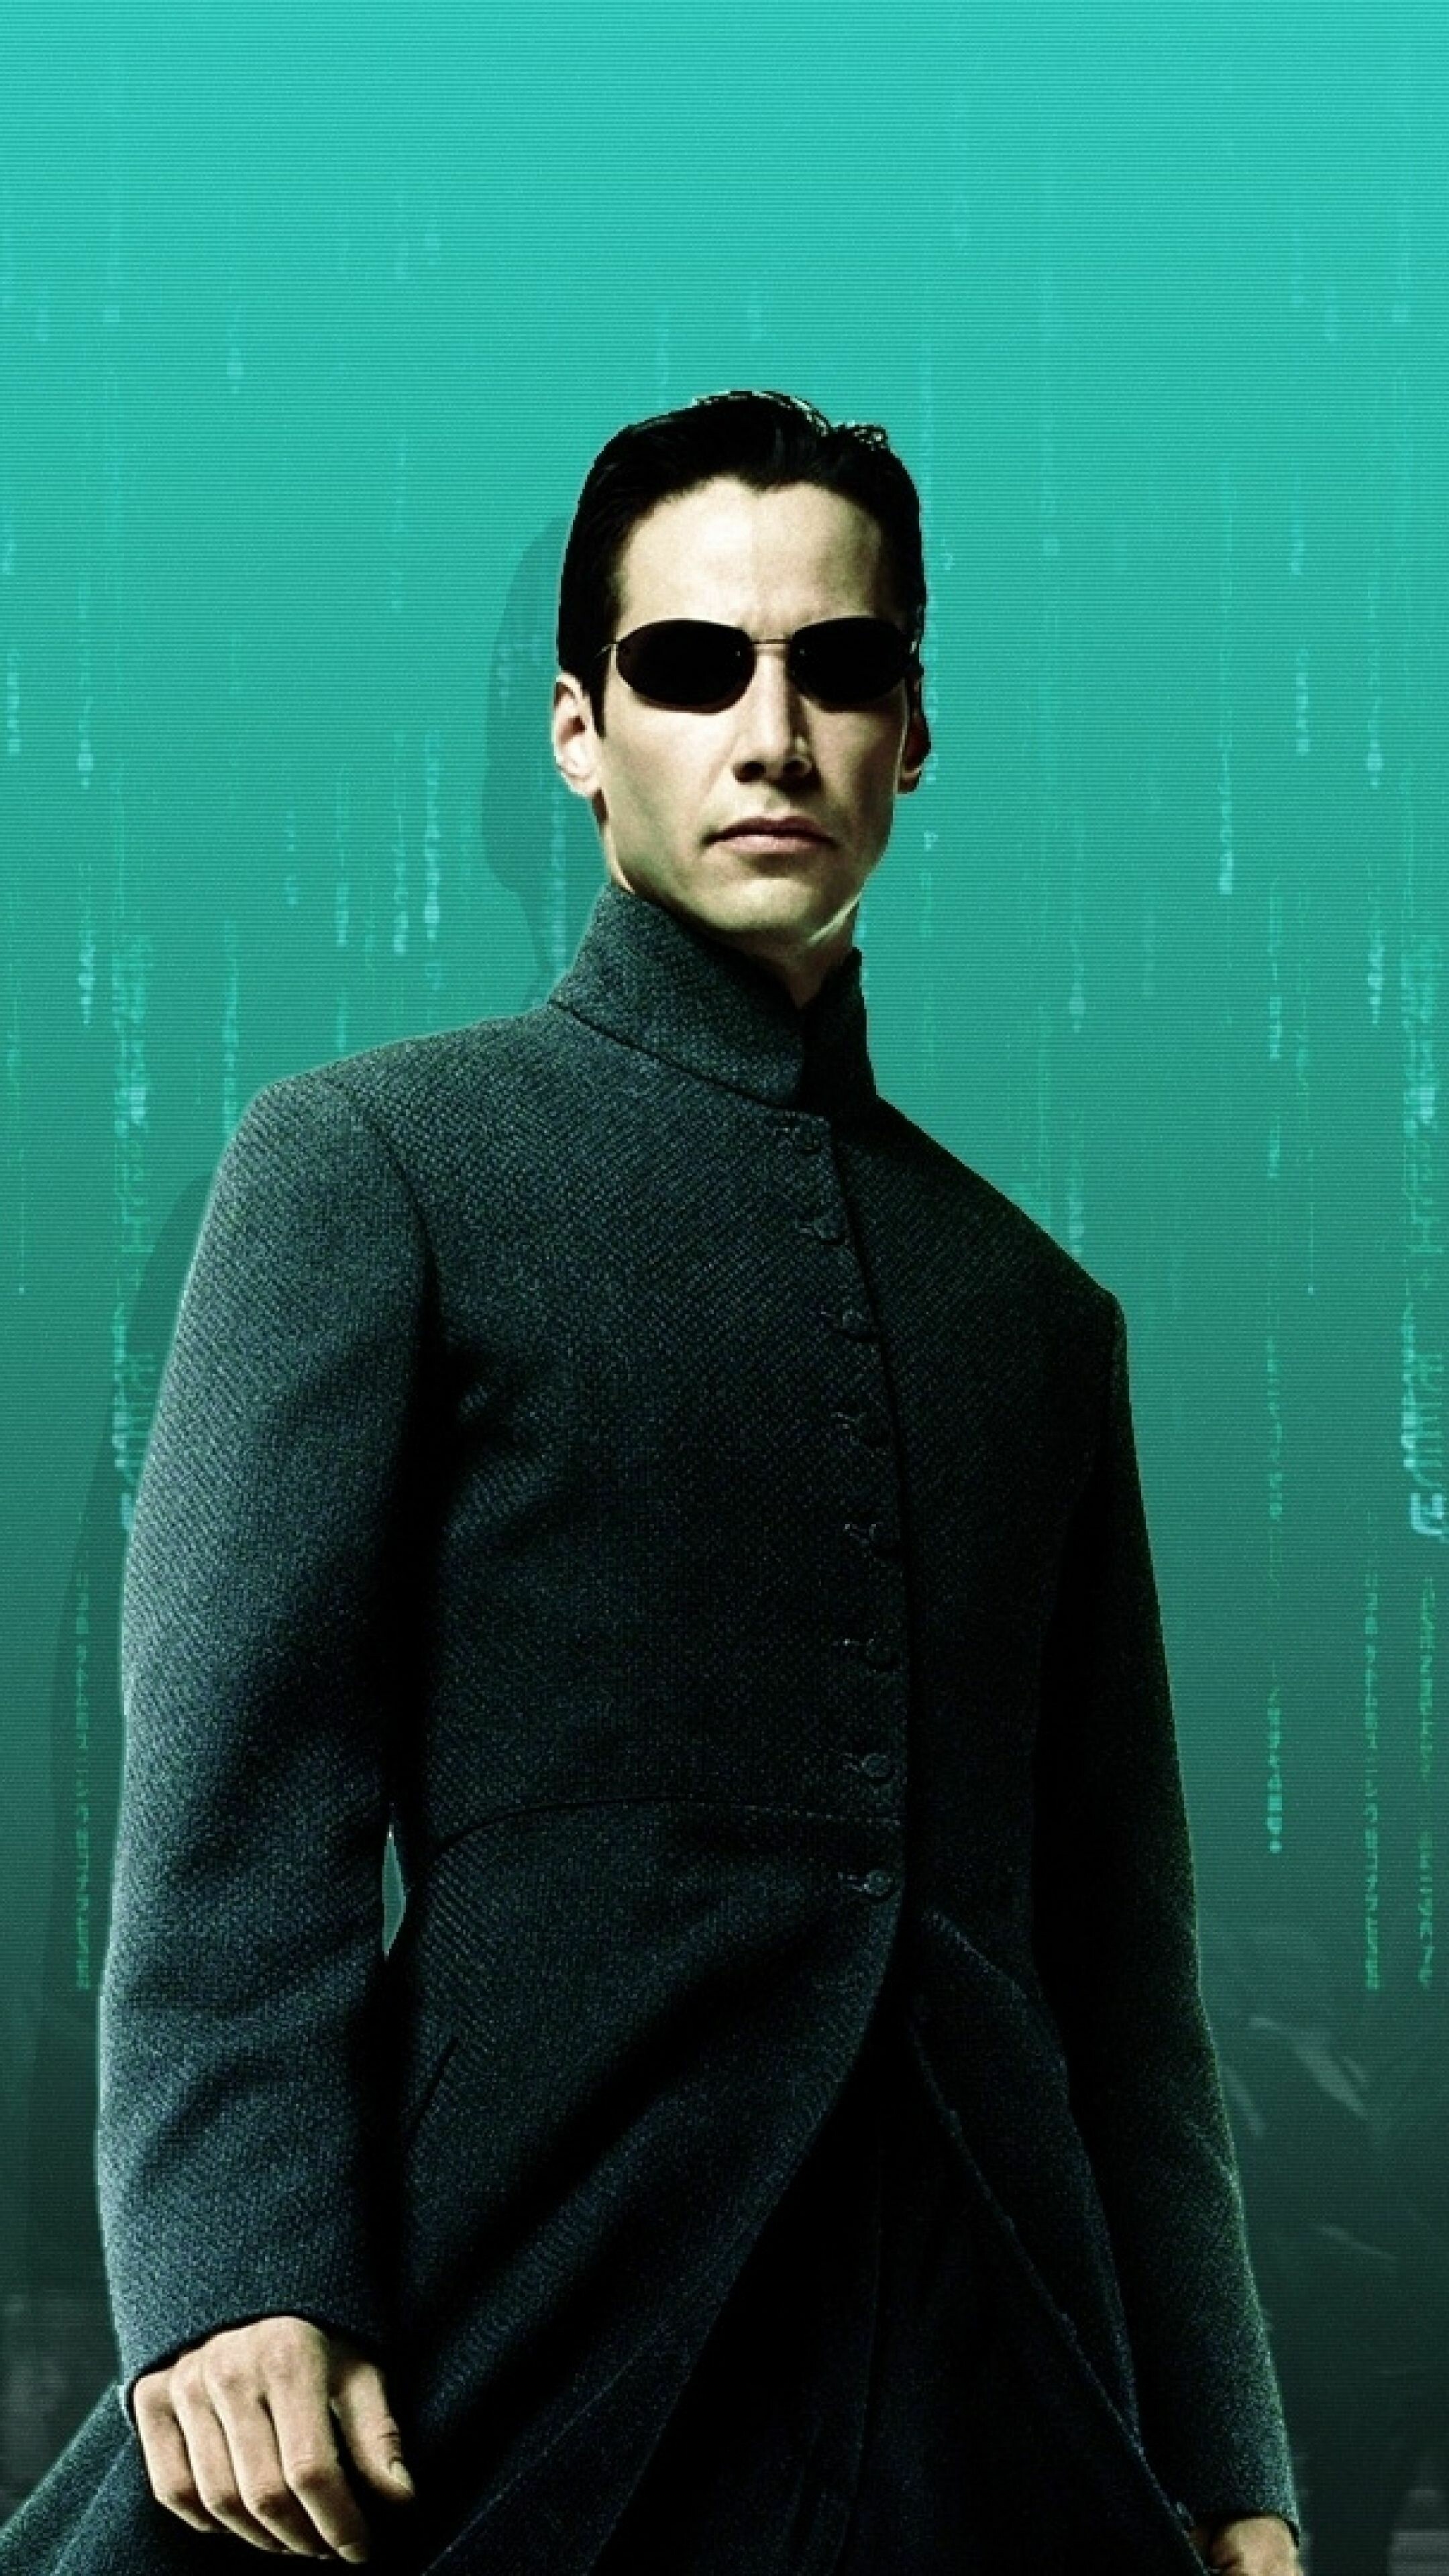 Matrix Franchise: Neo, A quiet programmer for the "respectable software company" Meta Cortex. 2160x3840 4K Wallpaper.